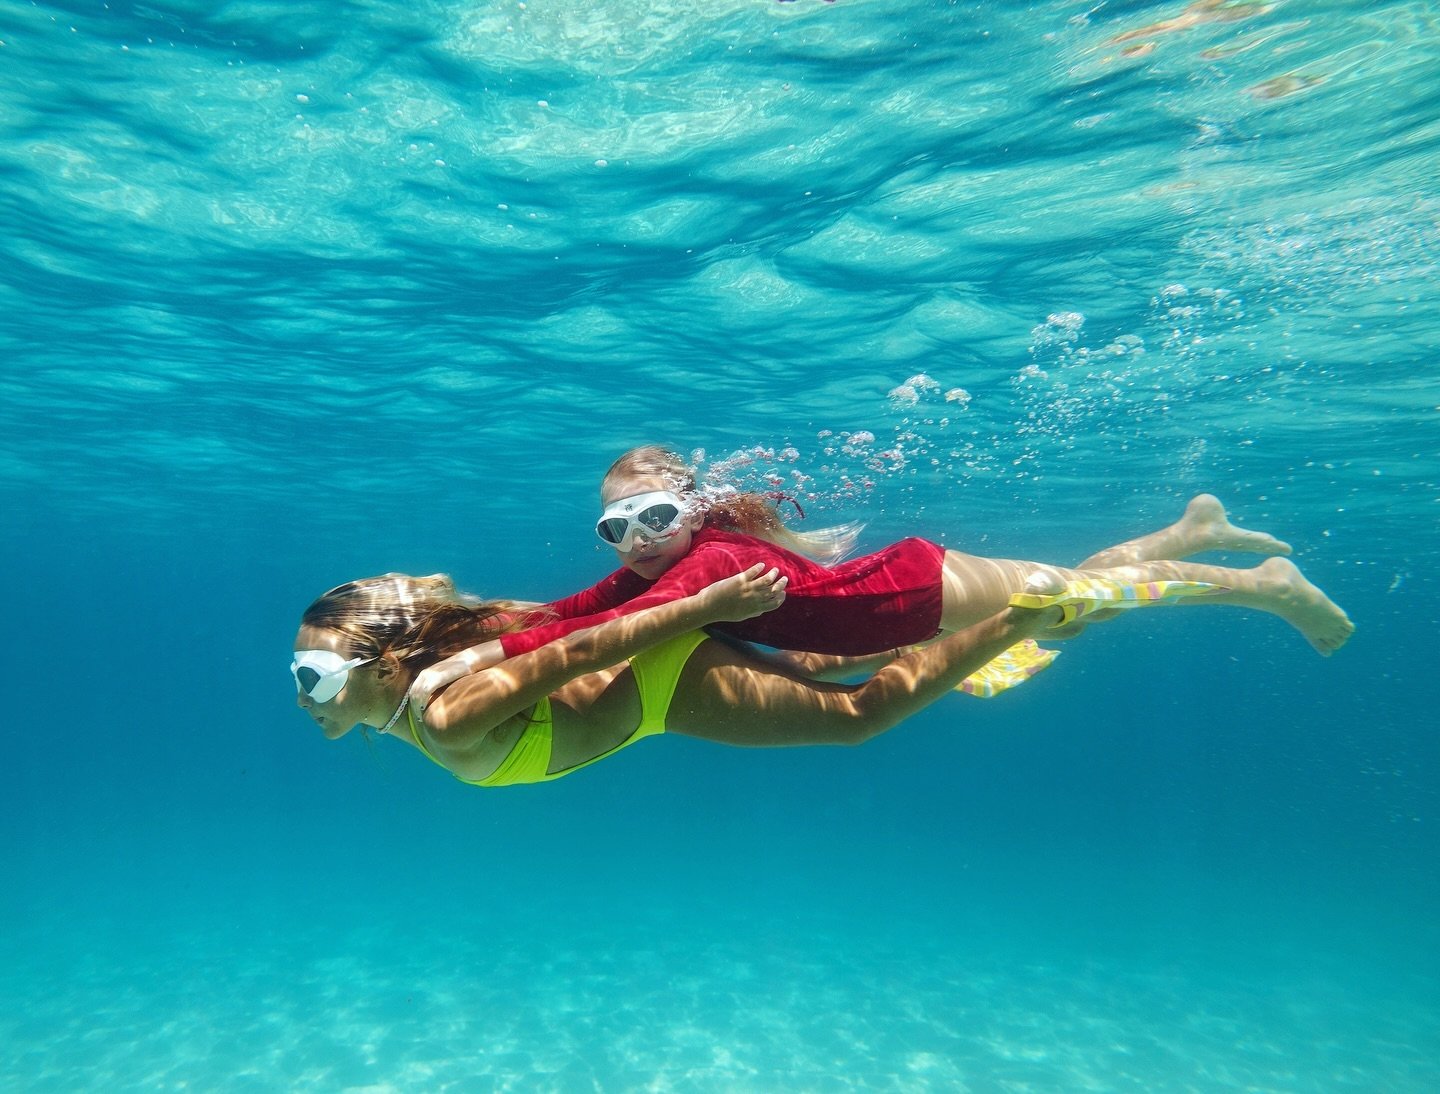 The girls working on their breath hold.

📷 Jeff Hornbaker @jeffthirdeye

🥽 The MYSTIC goggles in white

#swimmer #swim #breathhold #openocean #swimgoggles #summervibes #underwaterphotography #girls #swimming #freediving #thirdeye #thirdeyegoggles #